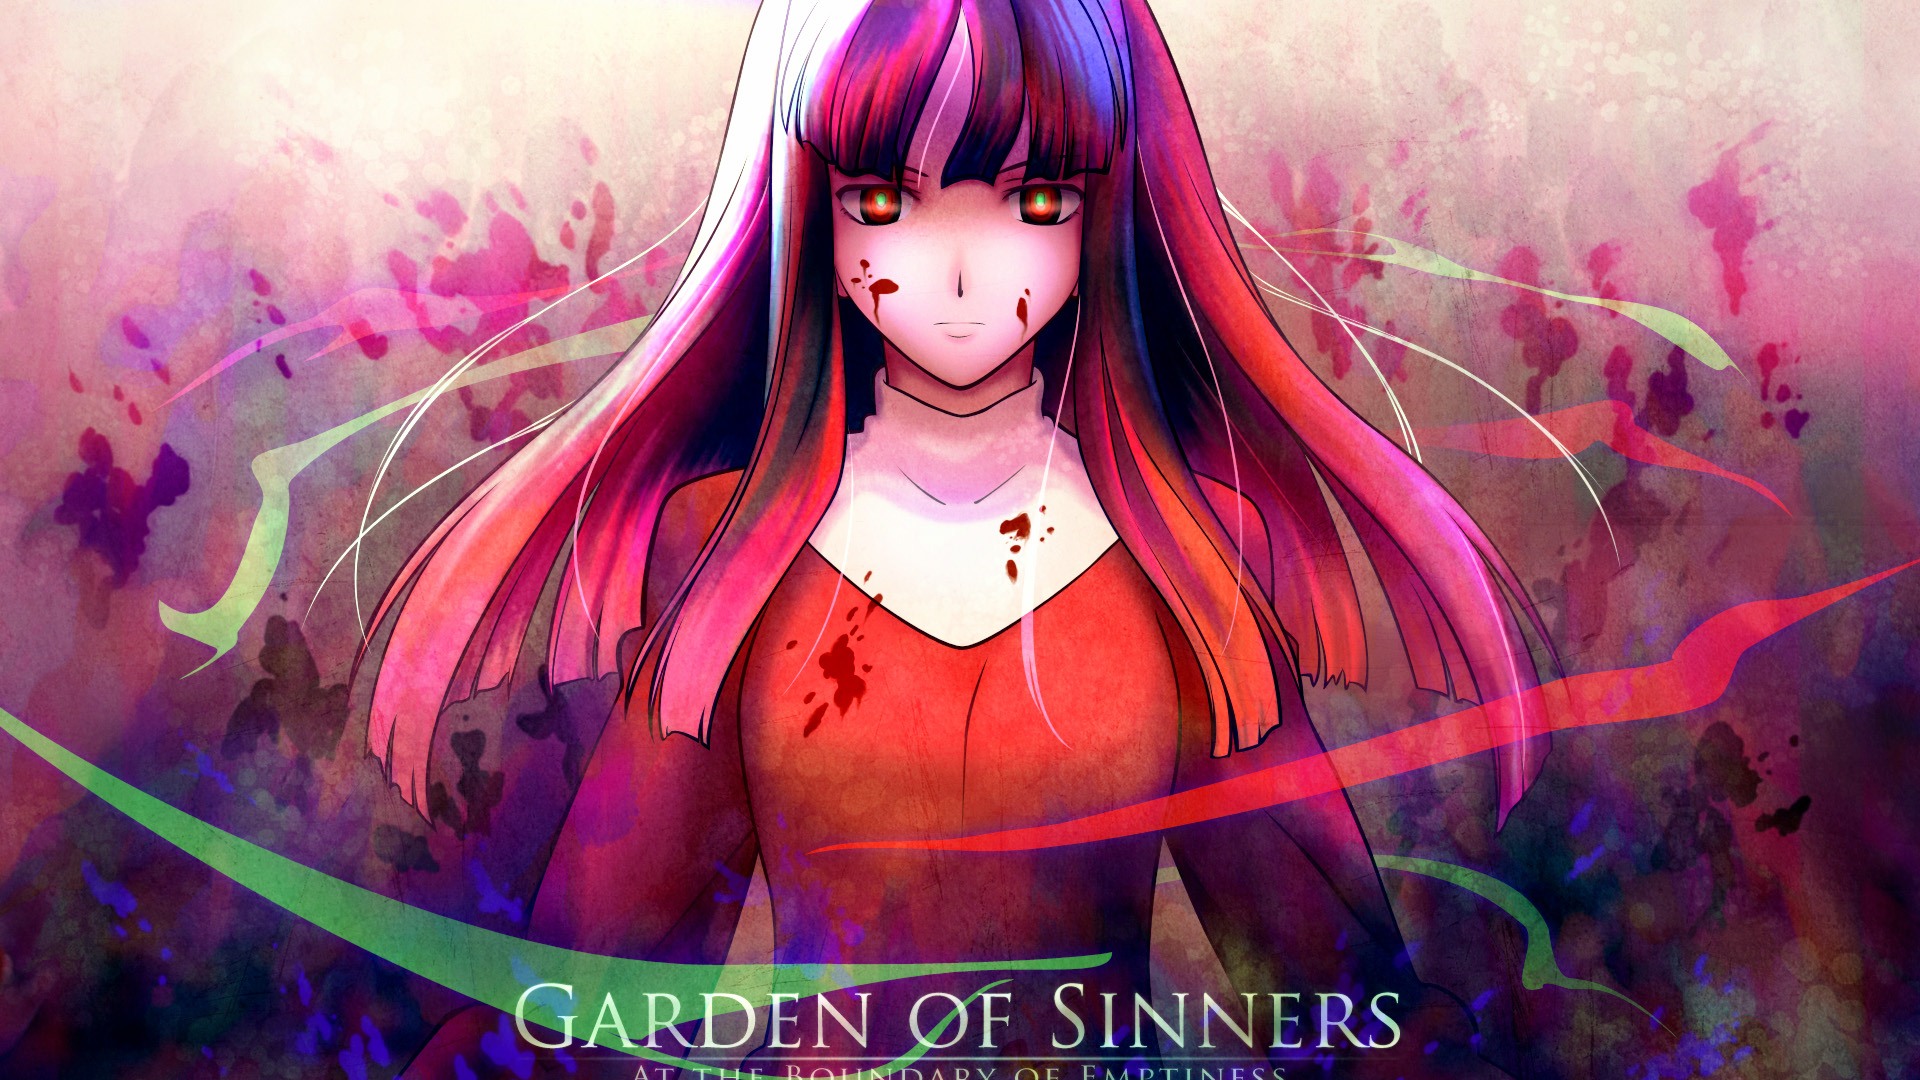 the Garden of sinners 空之境界 高清壁纸1 - 1920x1080